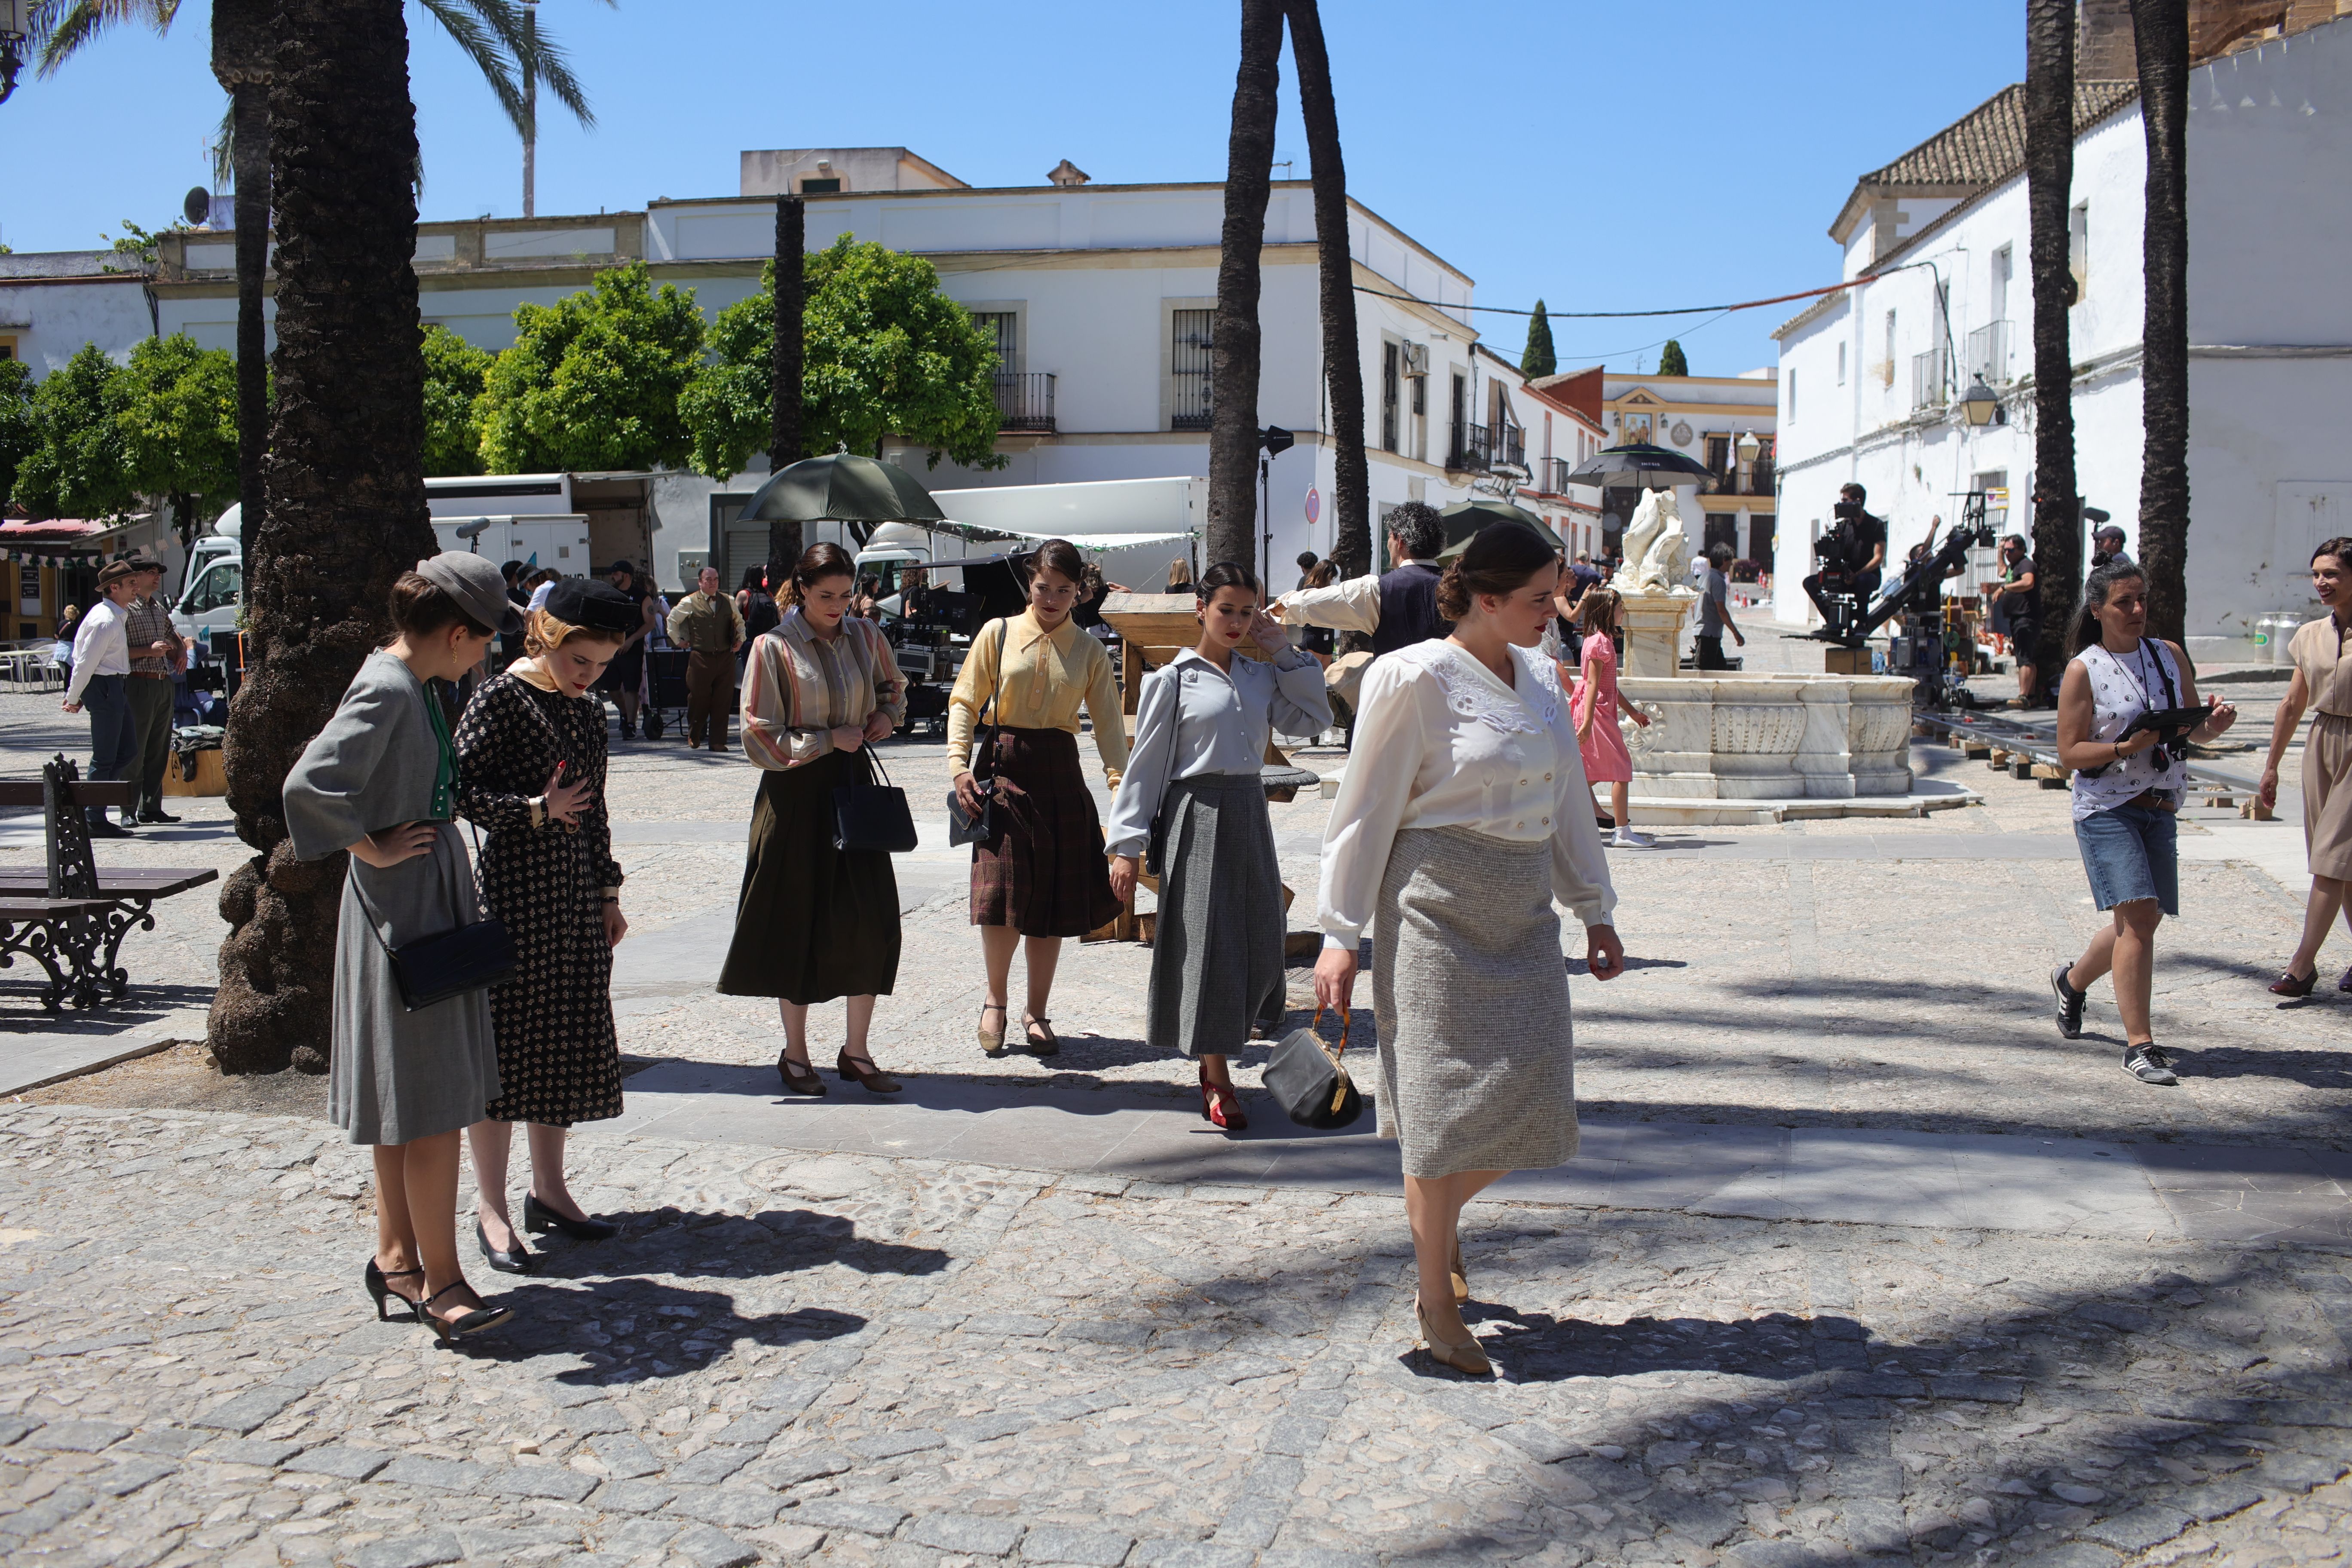 Rodaje de la serie en la plaza del Mercado, en pleno centro histórico de Jerez.